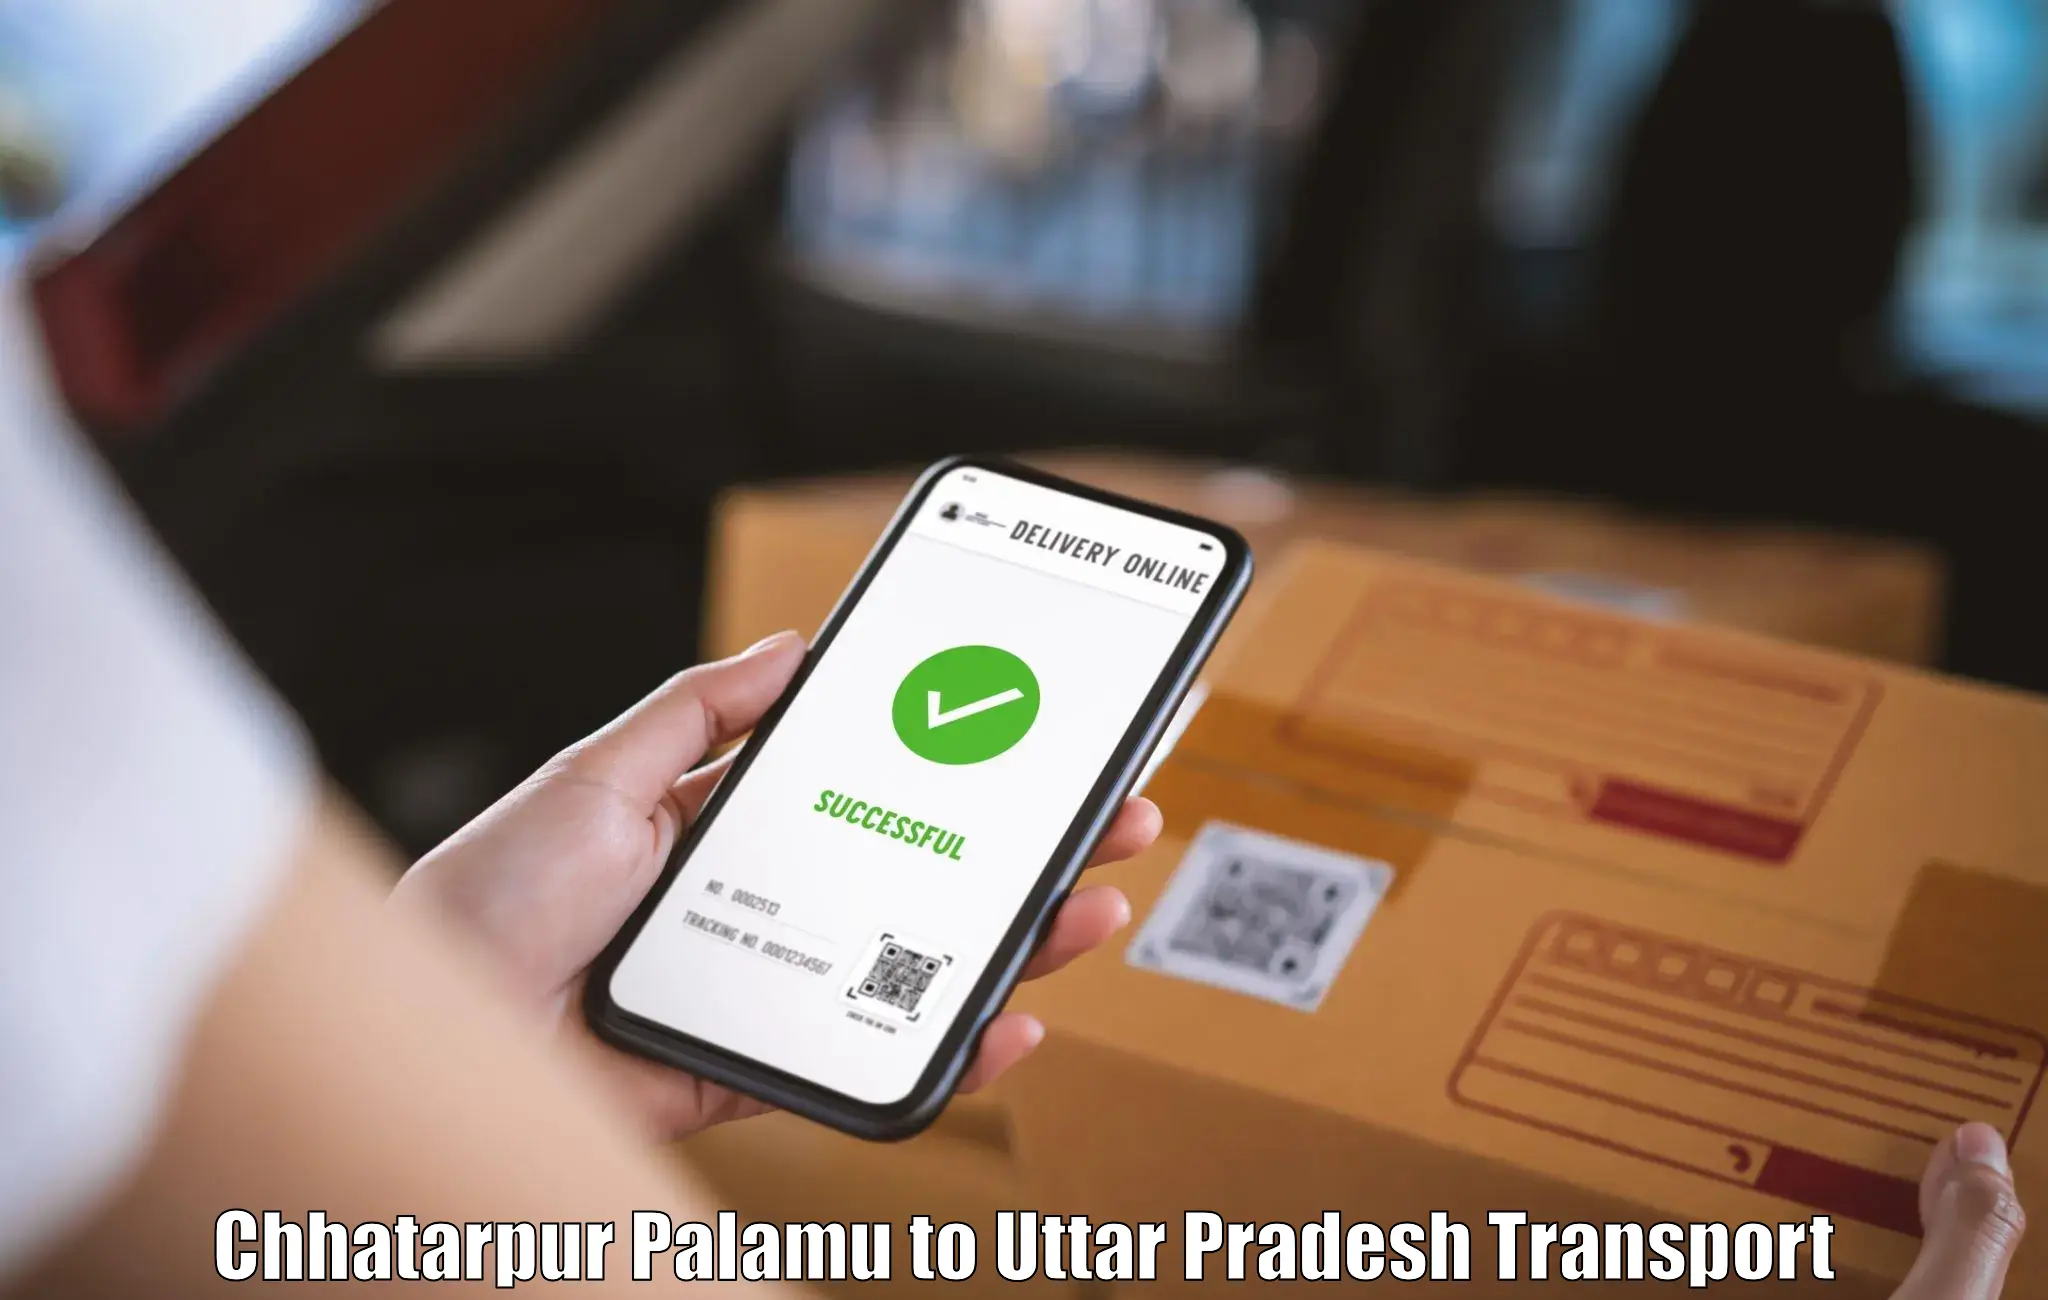 Online transport service Chhatarpur Palamu to Akbarpur